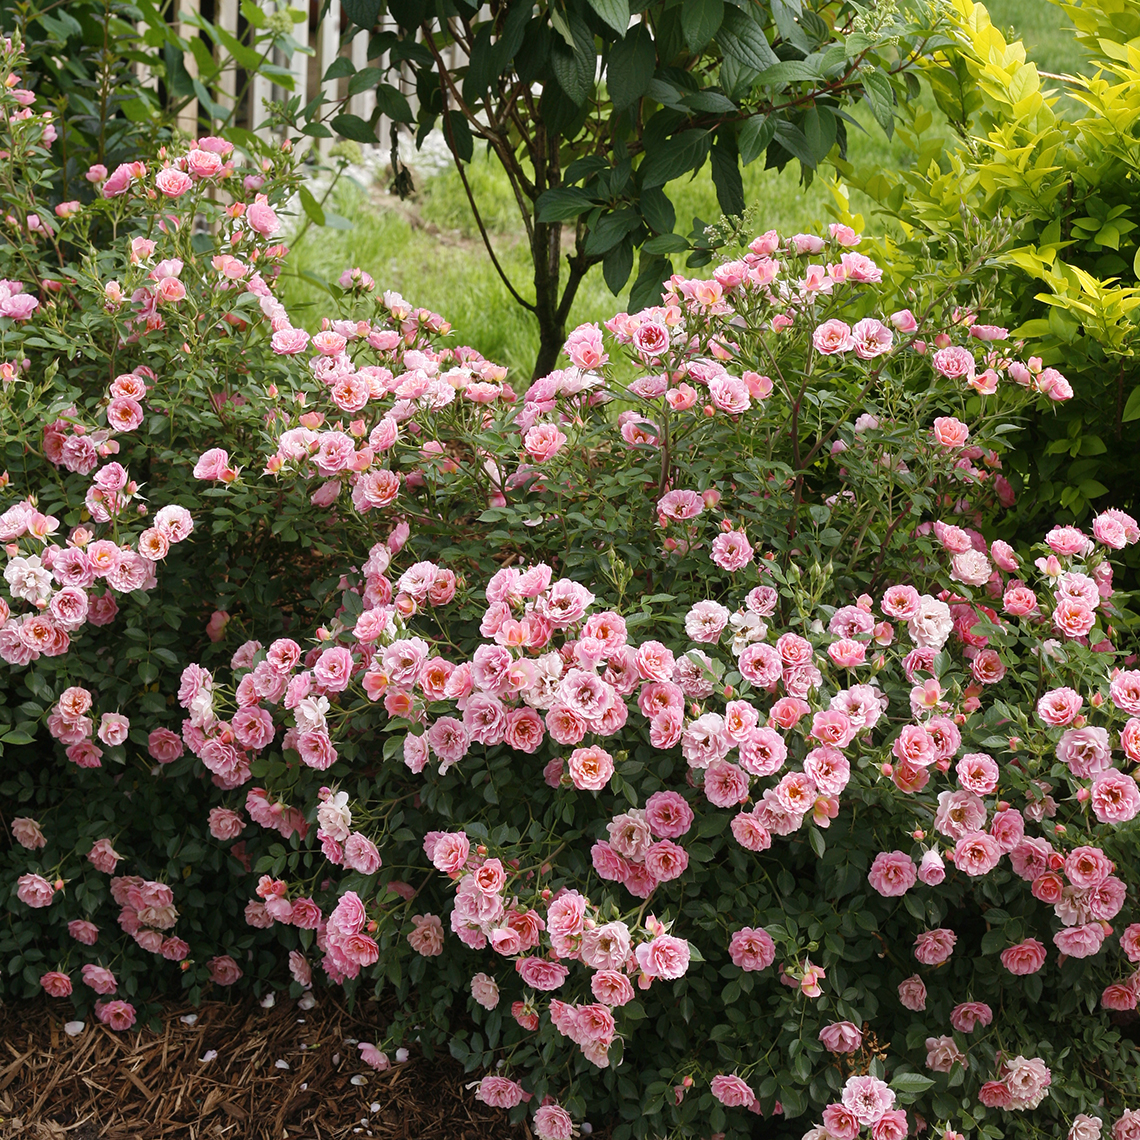 Abundantly bloomng Oso Easy Petit Pink Rosa in landscape border